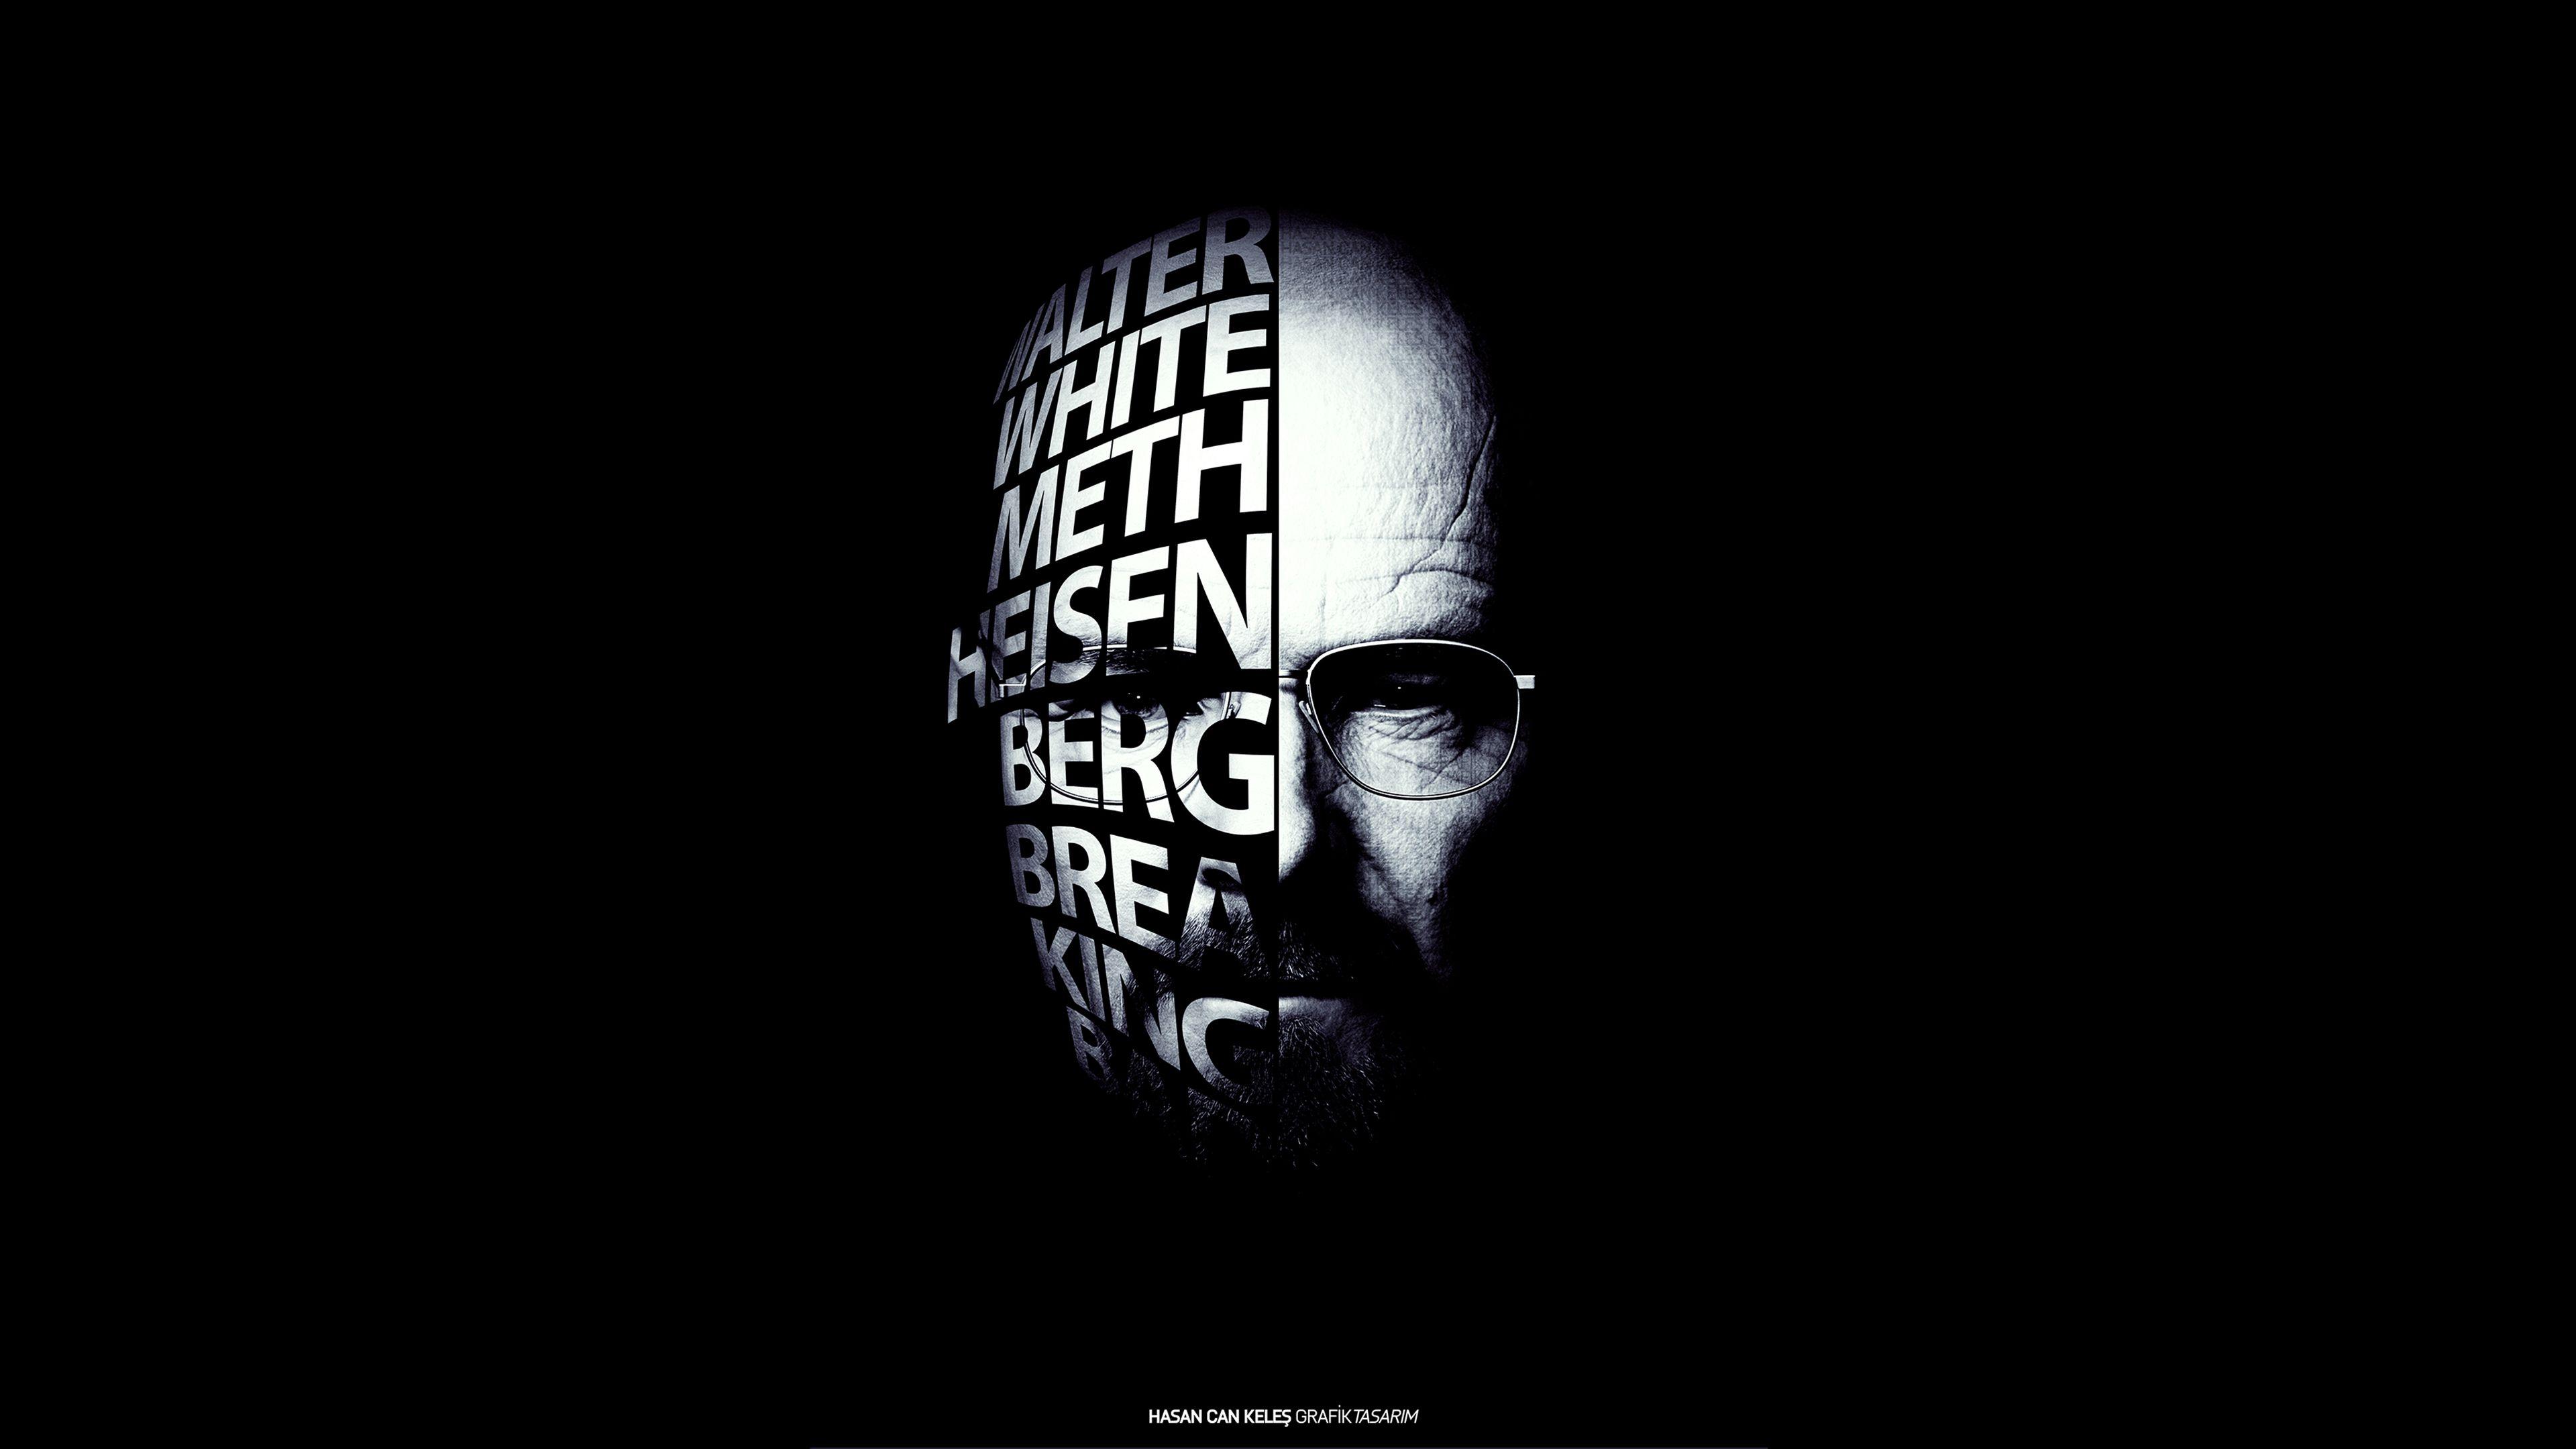 4K-resolution Black and White Logo - Wallpaper Breaking Bad, Walter White, Typography, 4K, TV Series